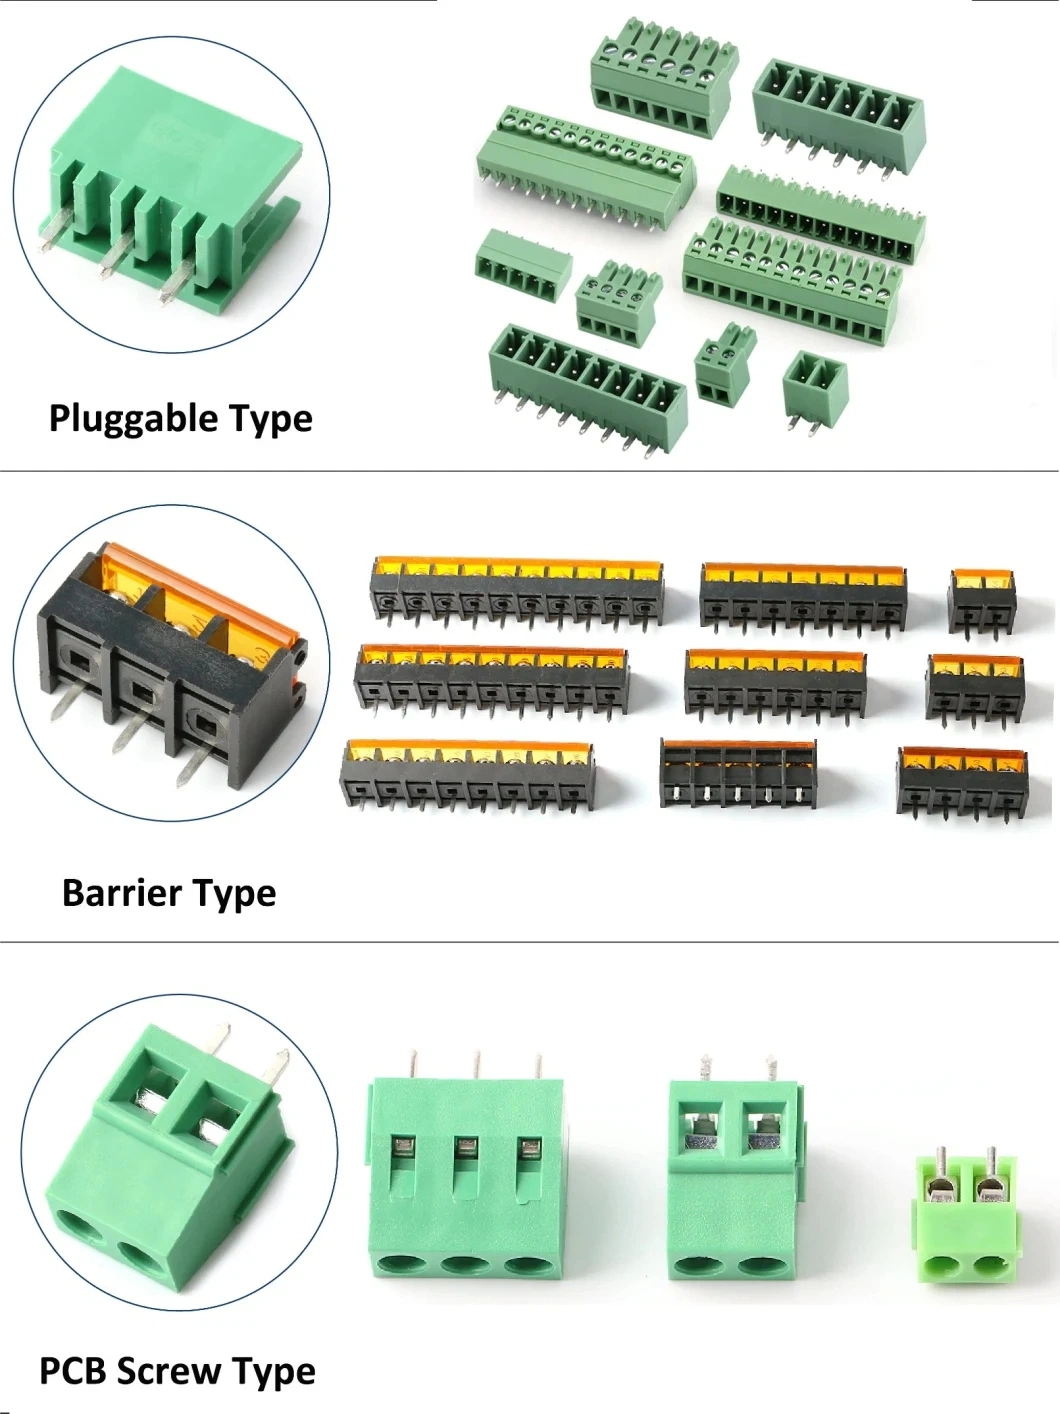 2p 3p 4p Screw 5.0mm Straight Pin PCB Blue Green Screw Terminal Block Connectors Splicing Type